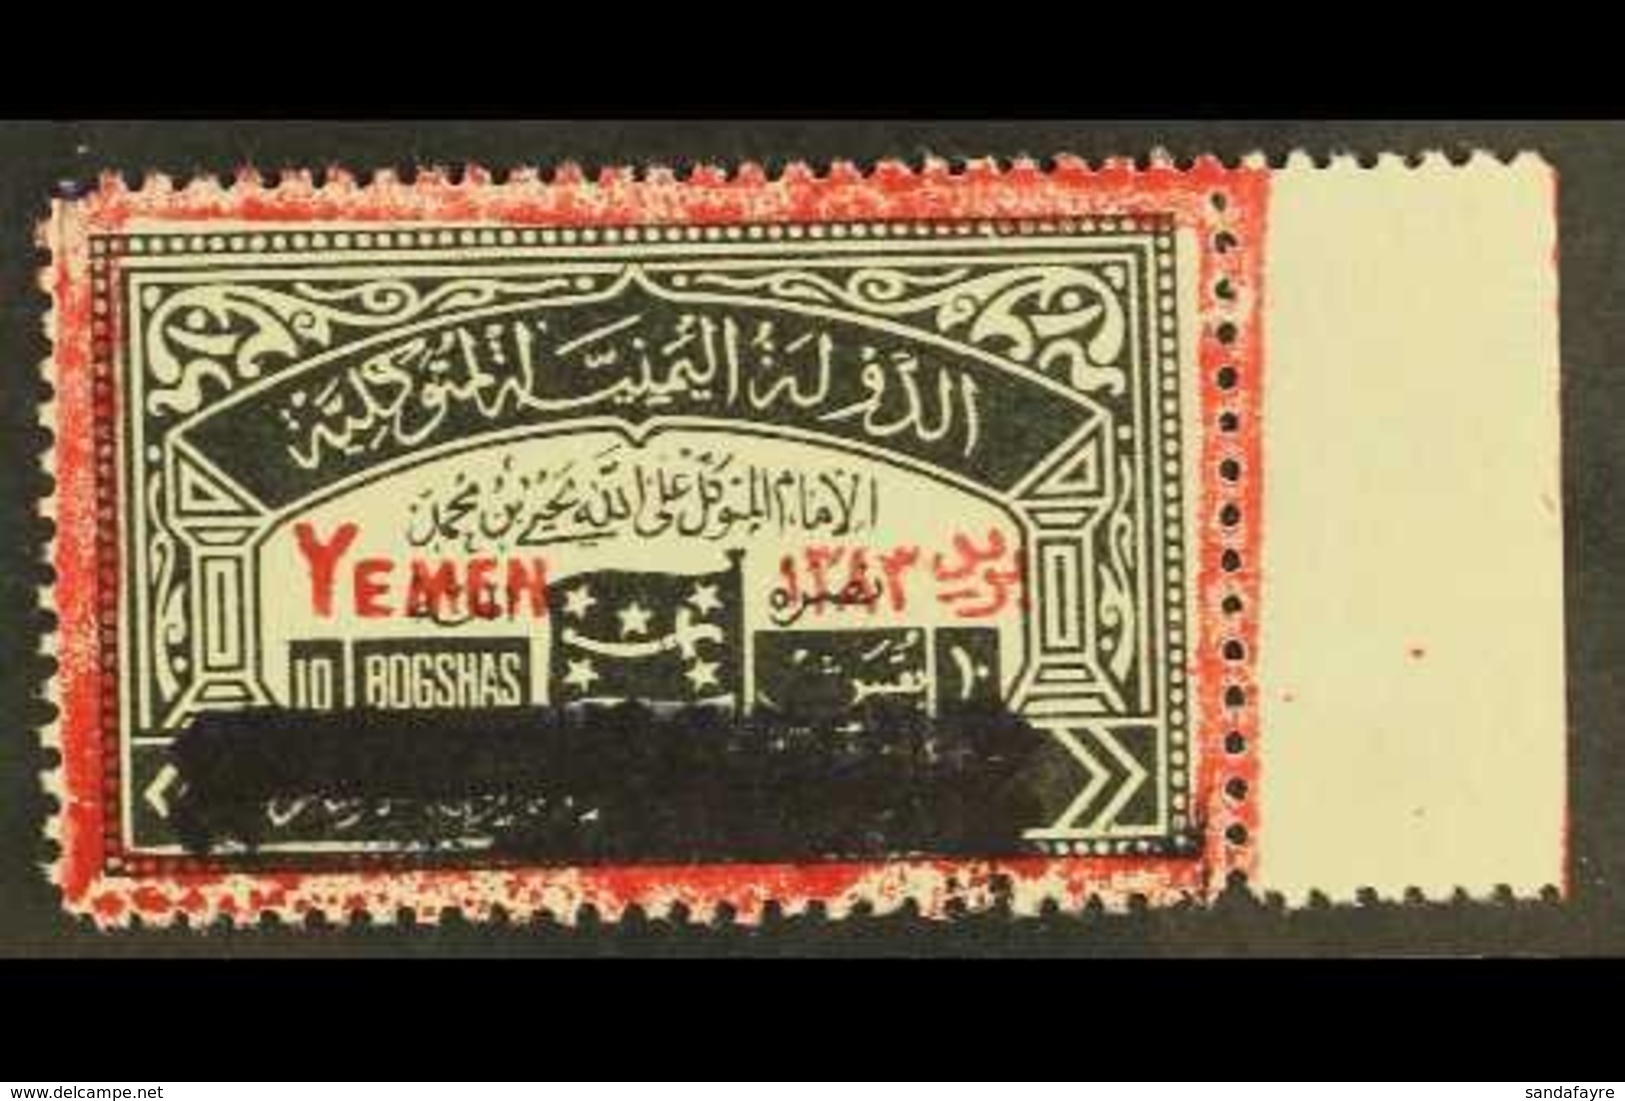 ROYALIST ISSUES 1965 10b Black & Carmine, Consular Fee Stamp Handstamped "YemenPostage 1383" At Al-Mahabeshah, SG R38a,  - Jemen